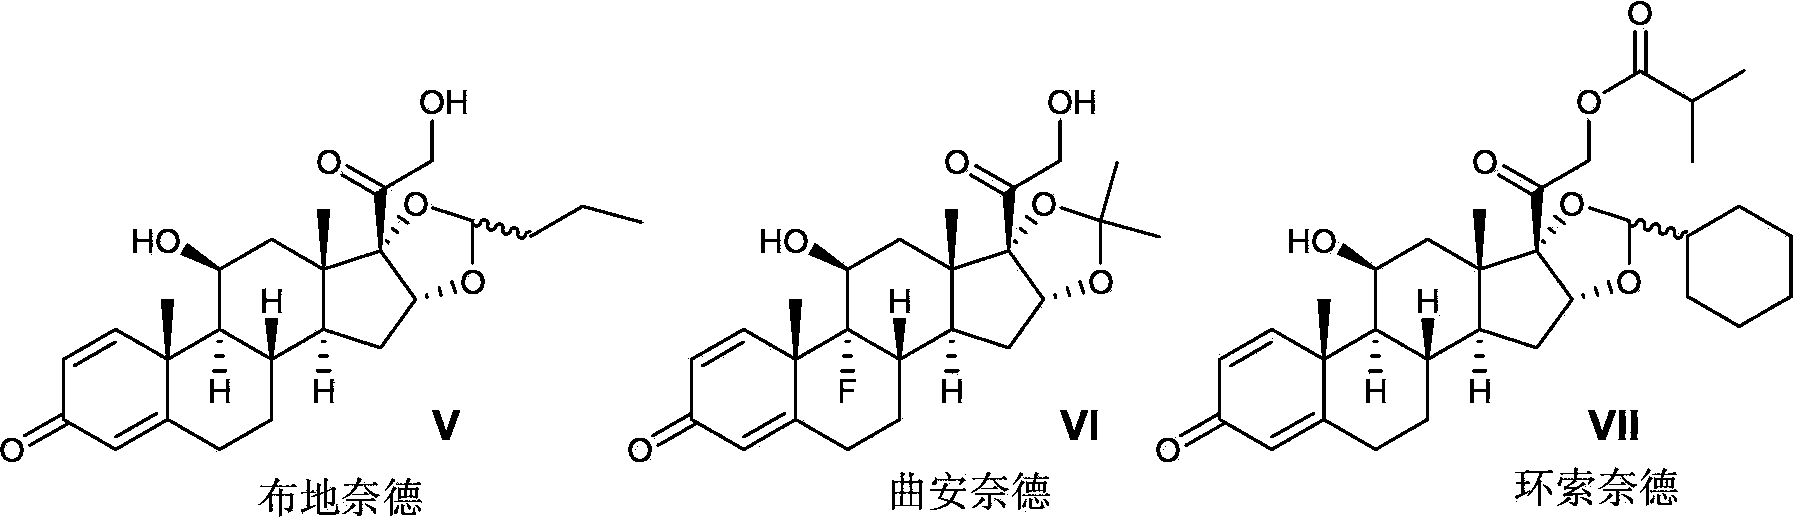 Preparation method of pregnane derivatives 16,17-acetal (ketone)